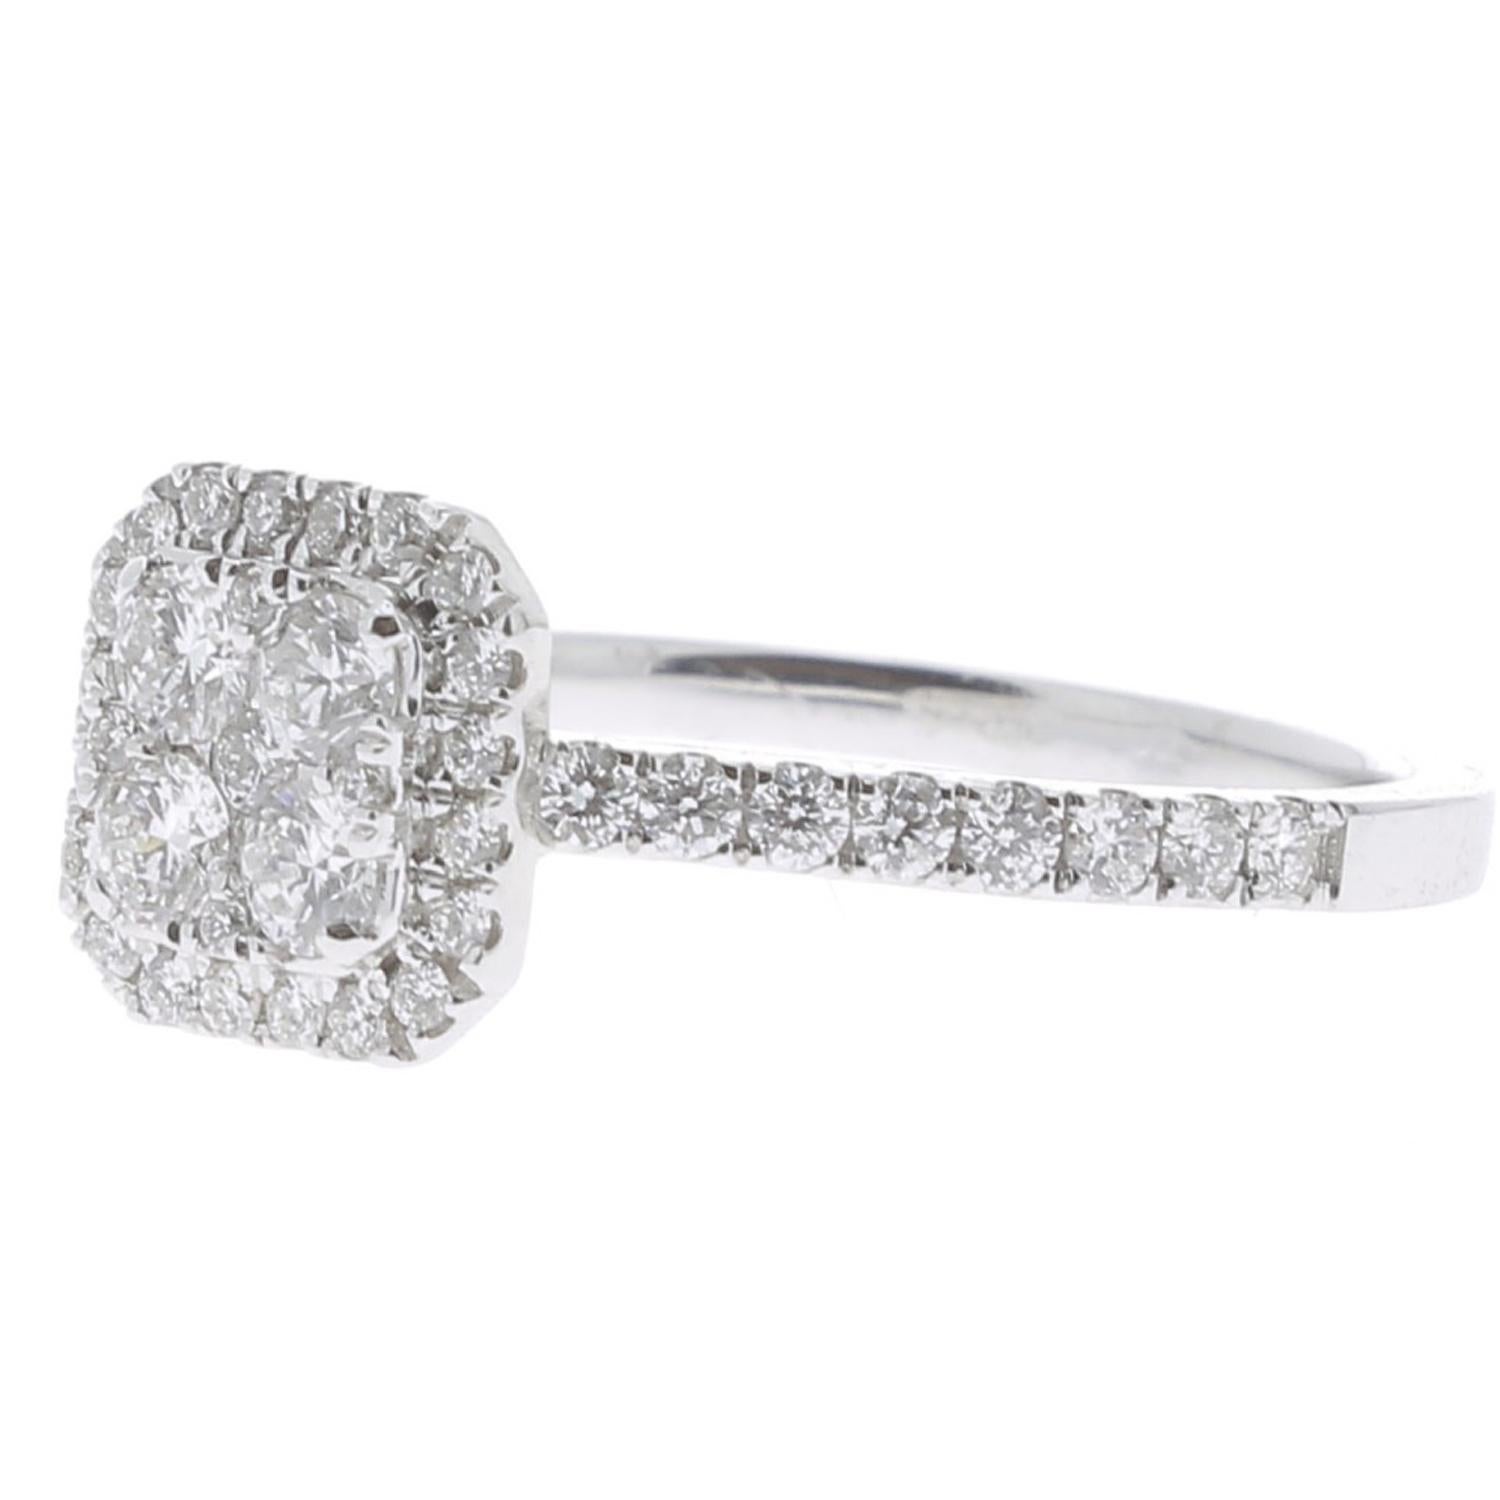 Contemporary 0.74 Carat Round Diamond Cushion Ring 18K White Gold FashionRing Engagement Ring